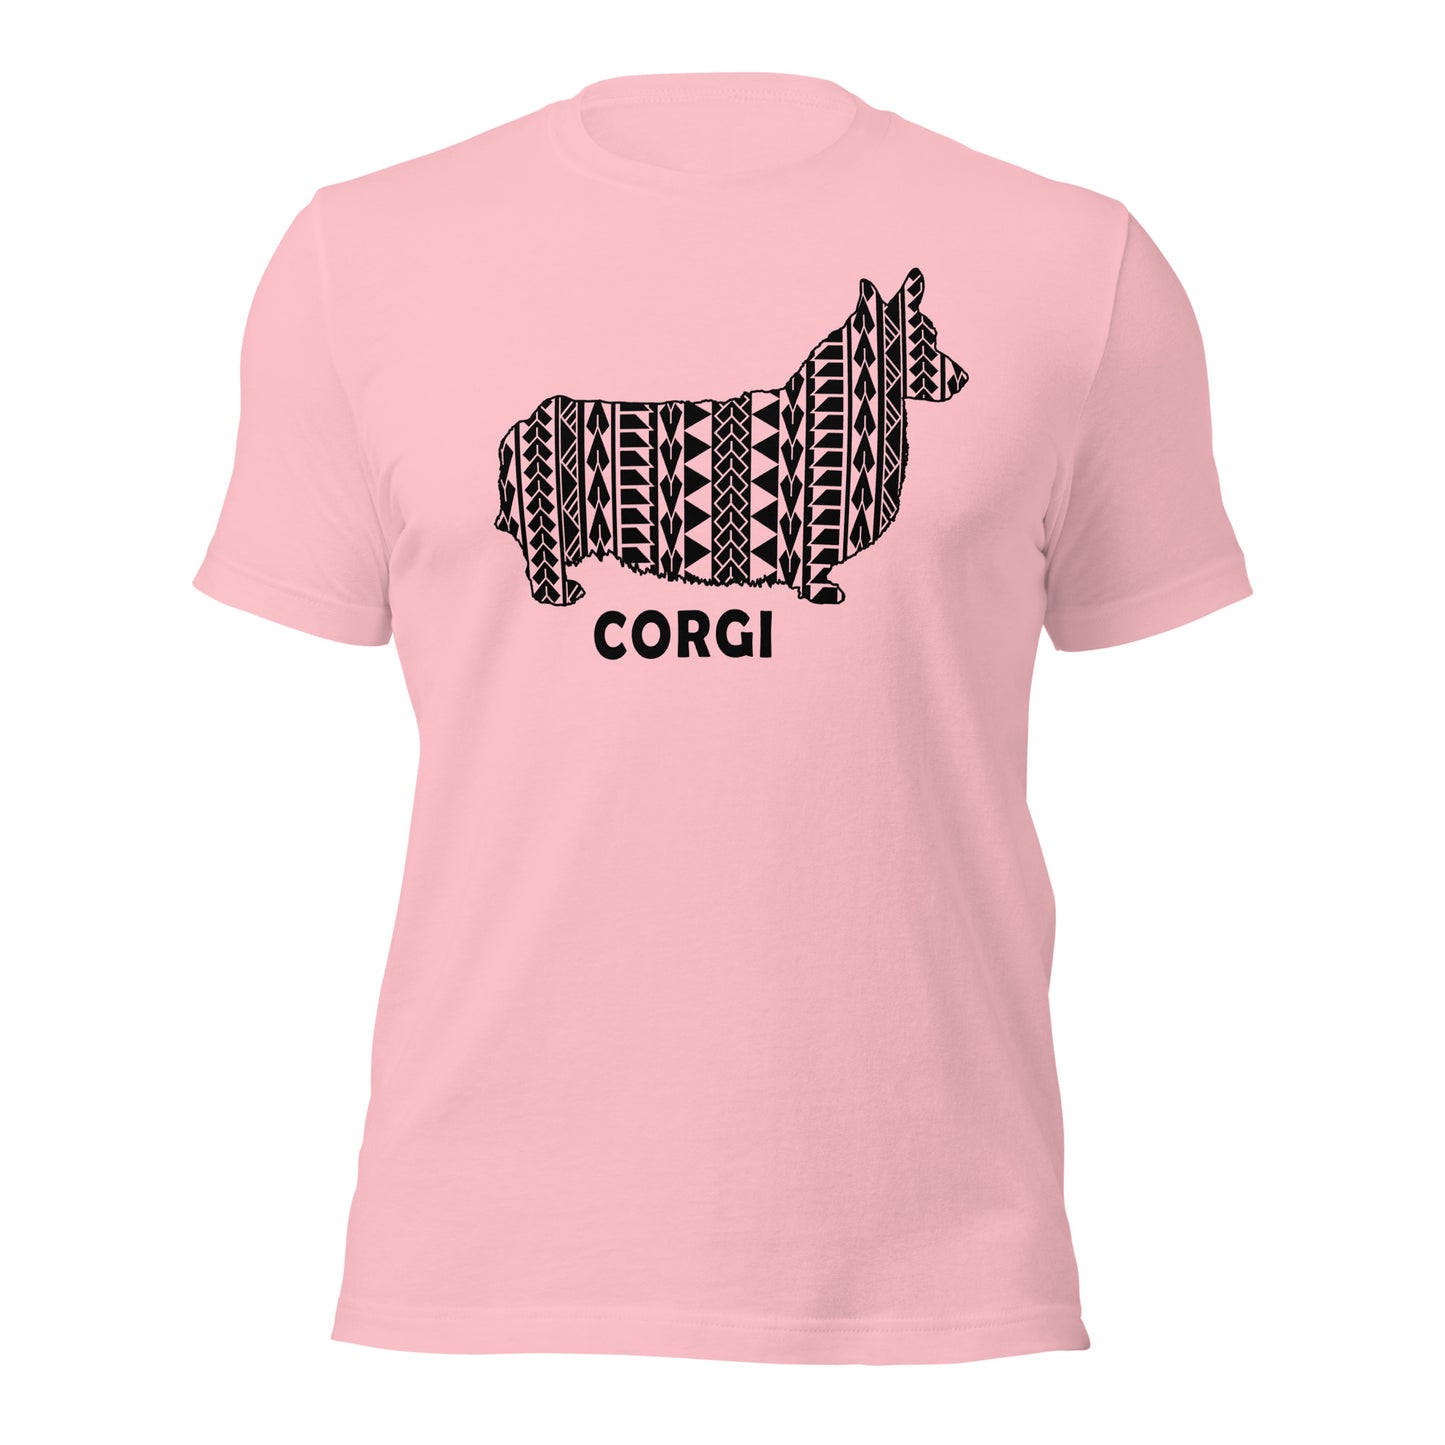 Corgi Polynesian t-shirt pink by Dog Artistry.